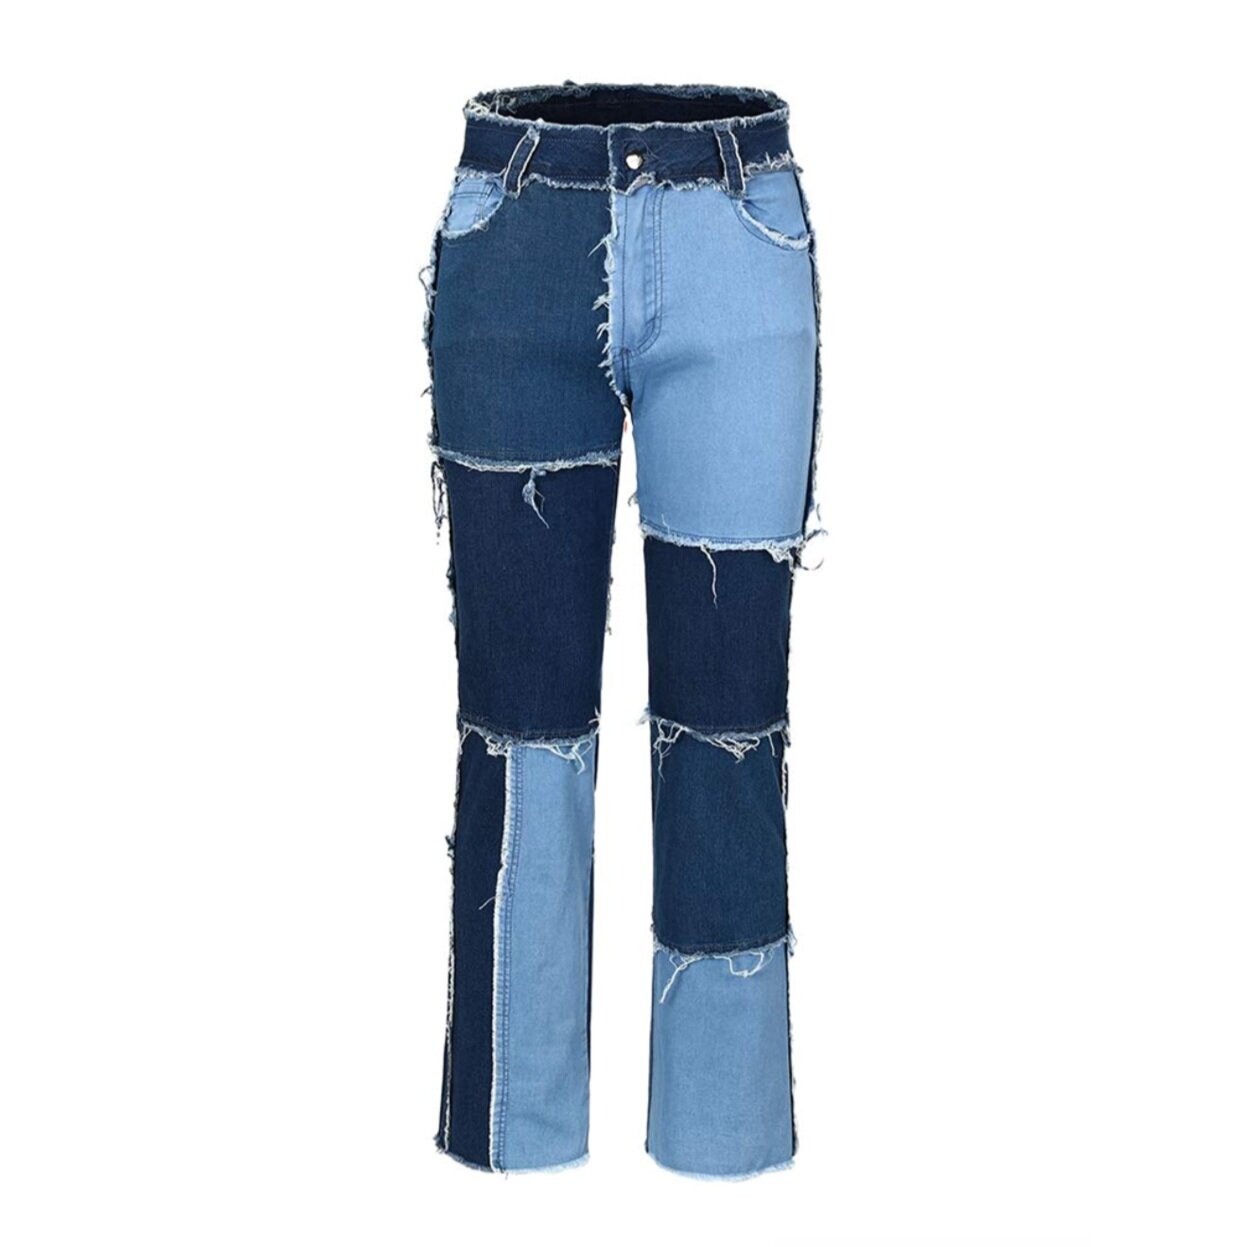 THUNDER STAR Patchwork Jeans ( $35.99)